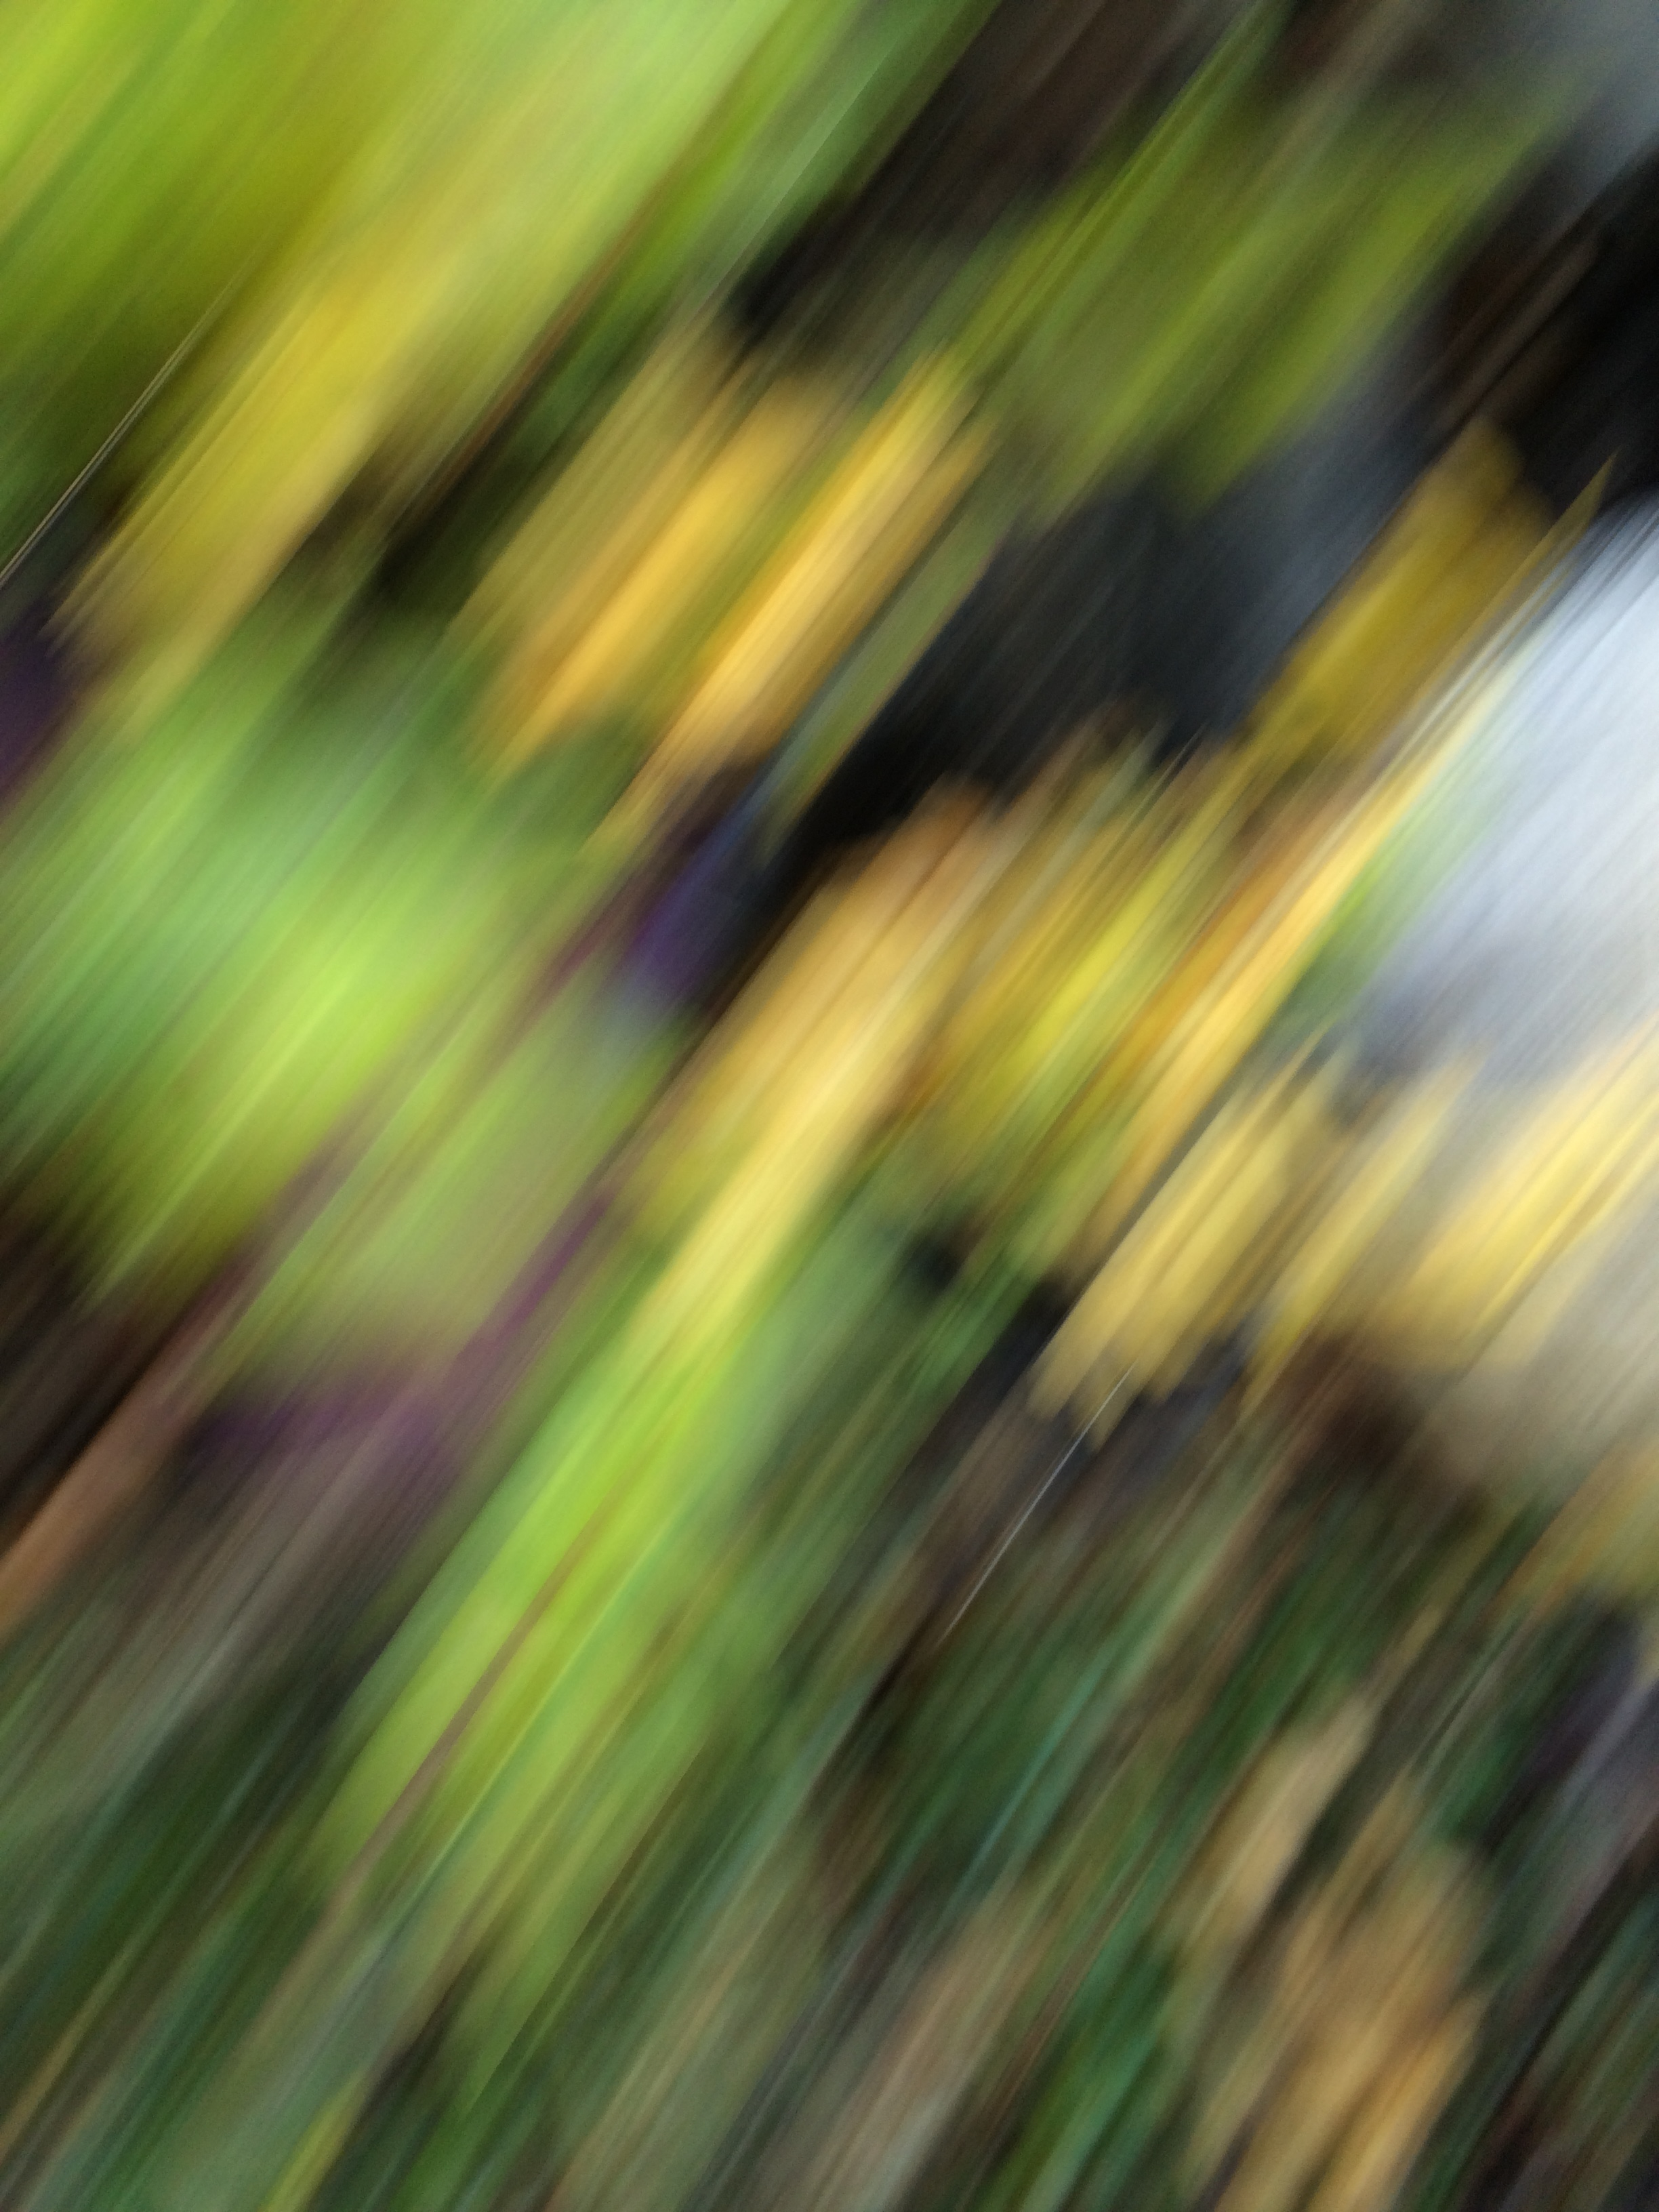 blurry photo depicting garden activity